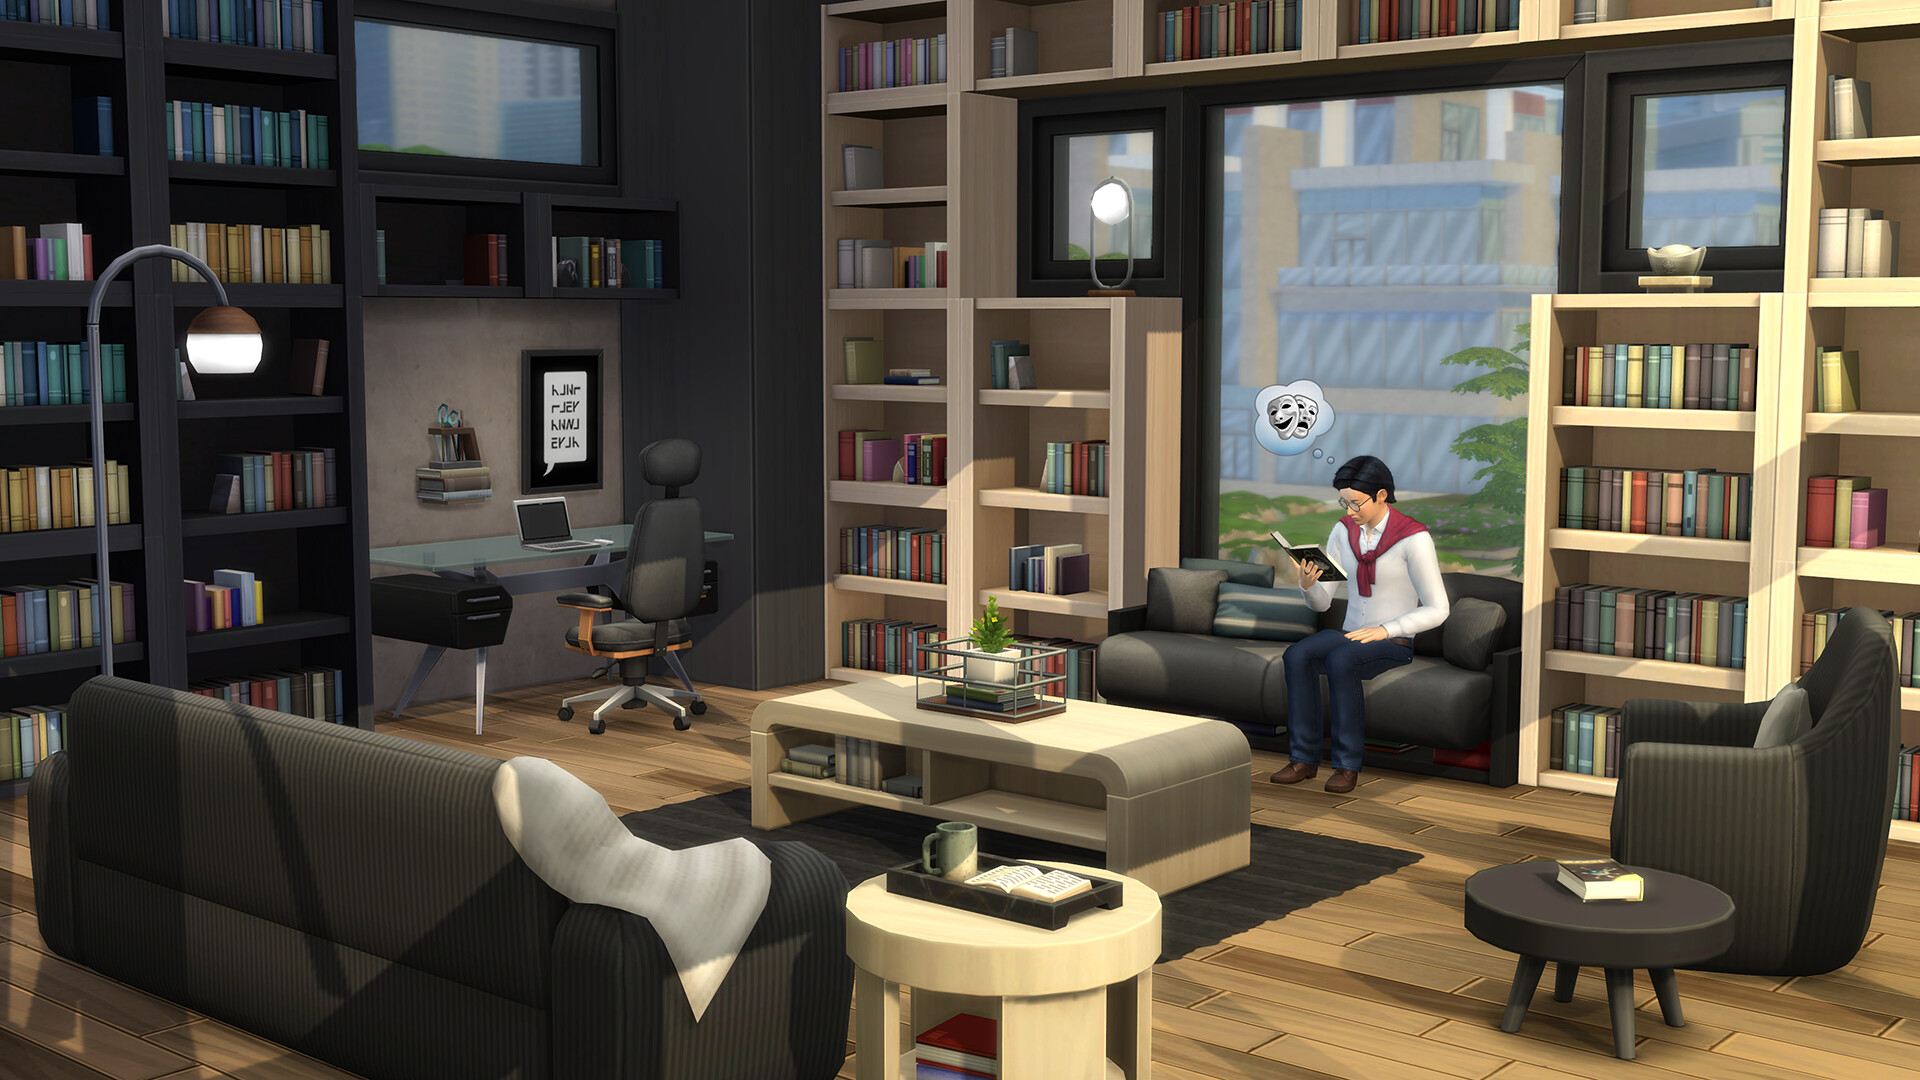 The Sims 4 - Book Nook Kit DLC Origin CD Key 7.7 usd